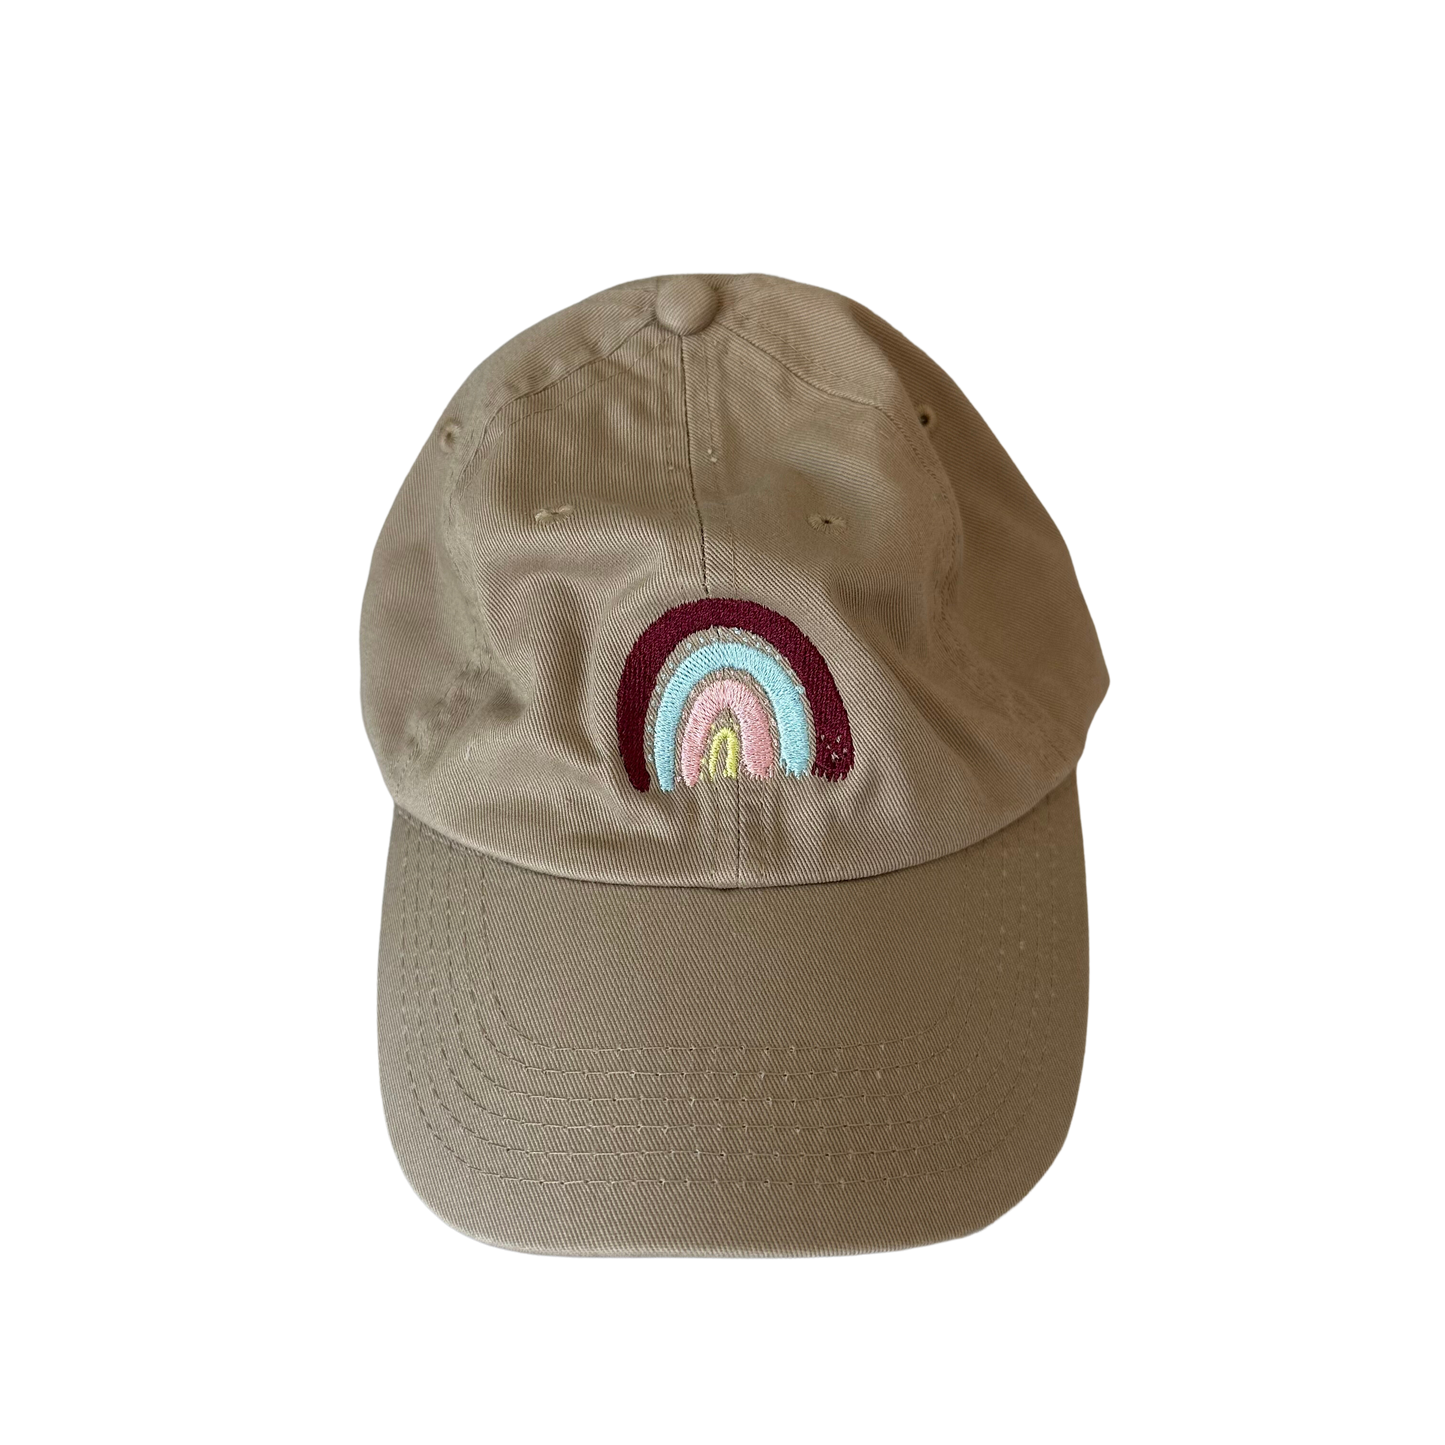 Classic Khaki Rainbow Embroidered Dad Cap Hat